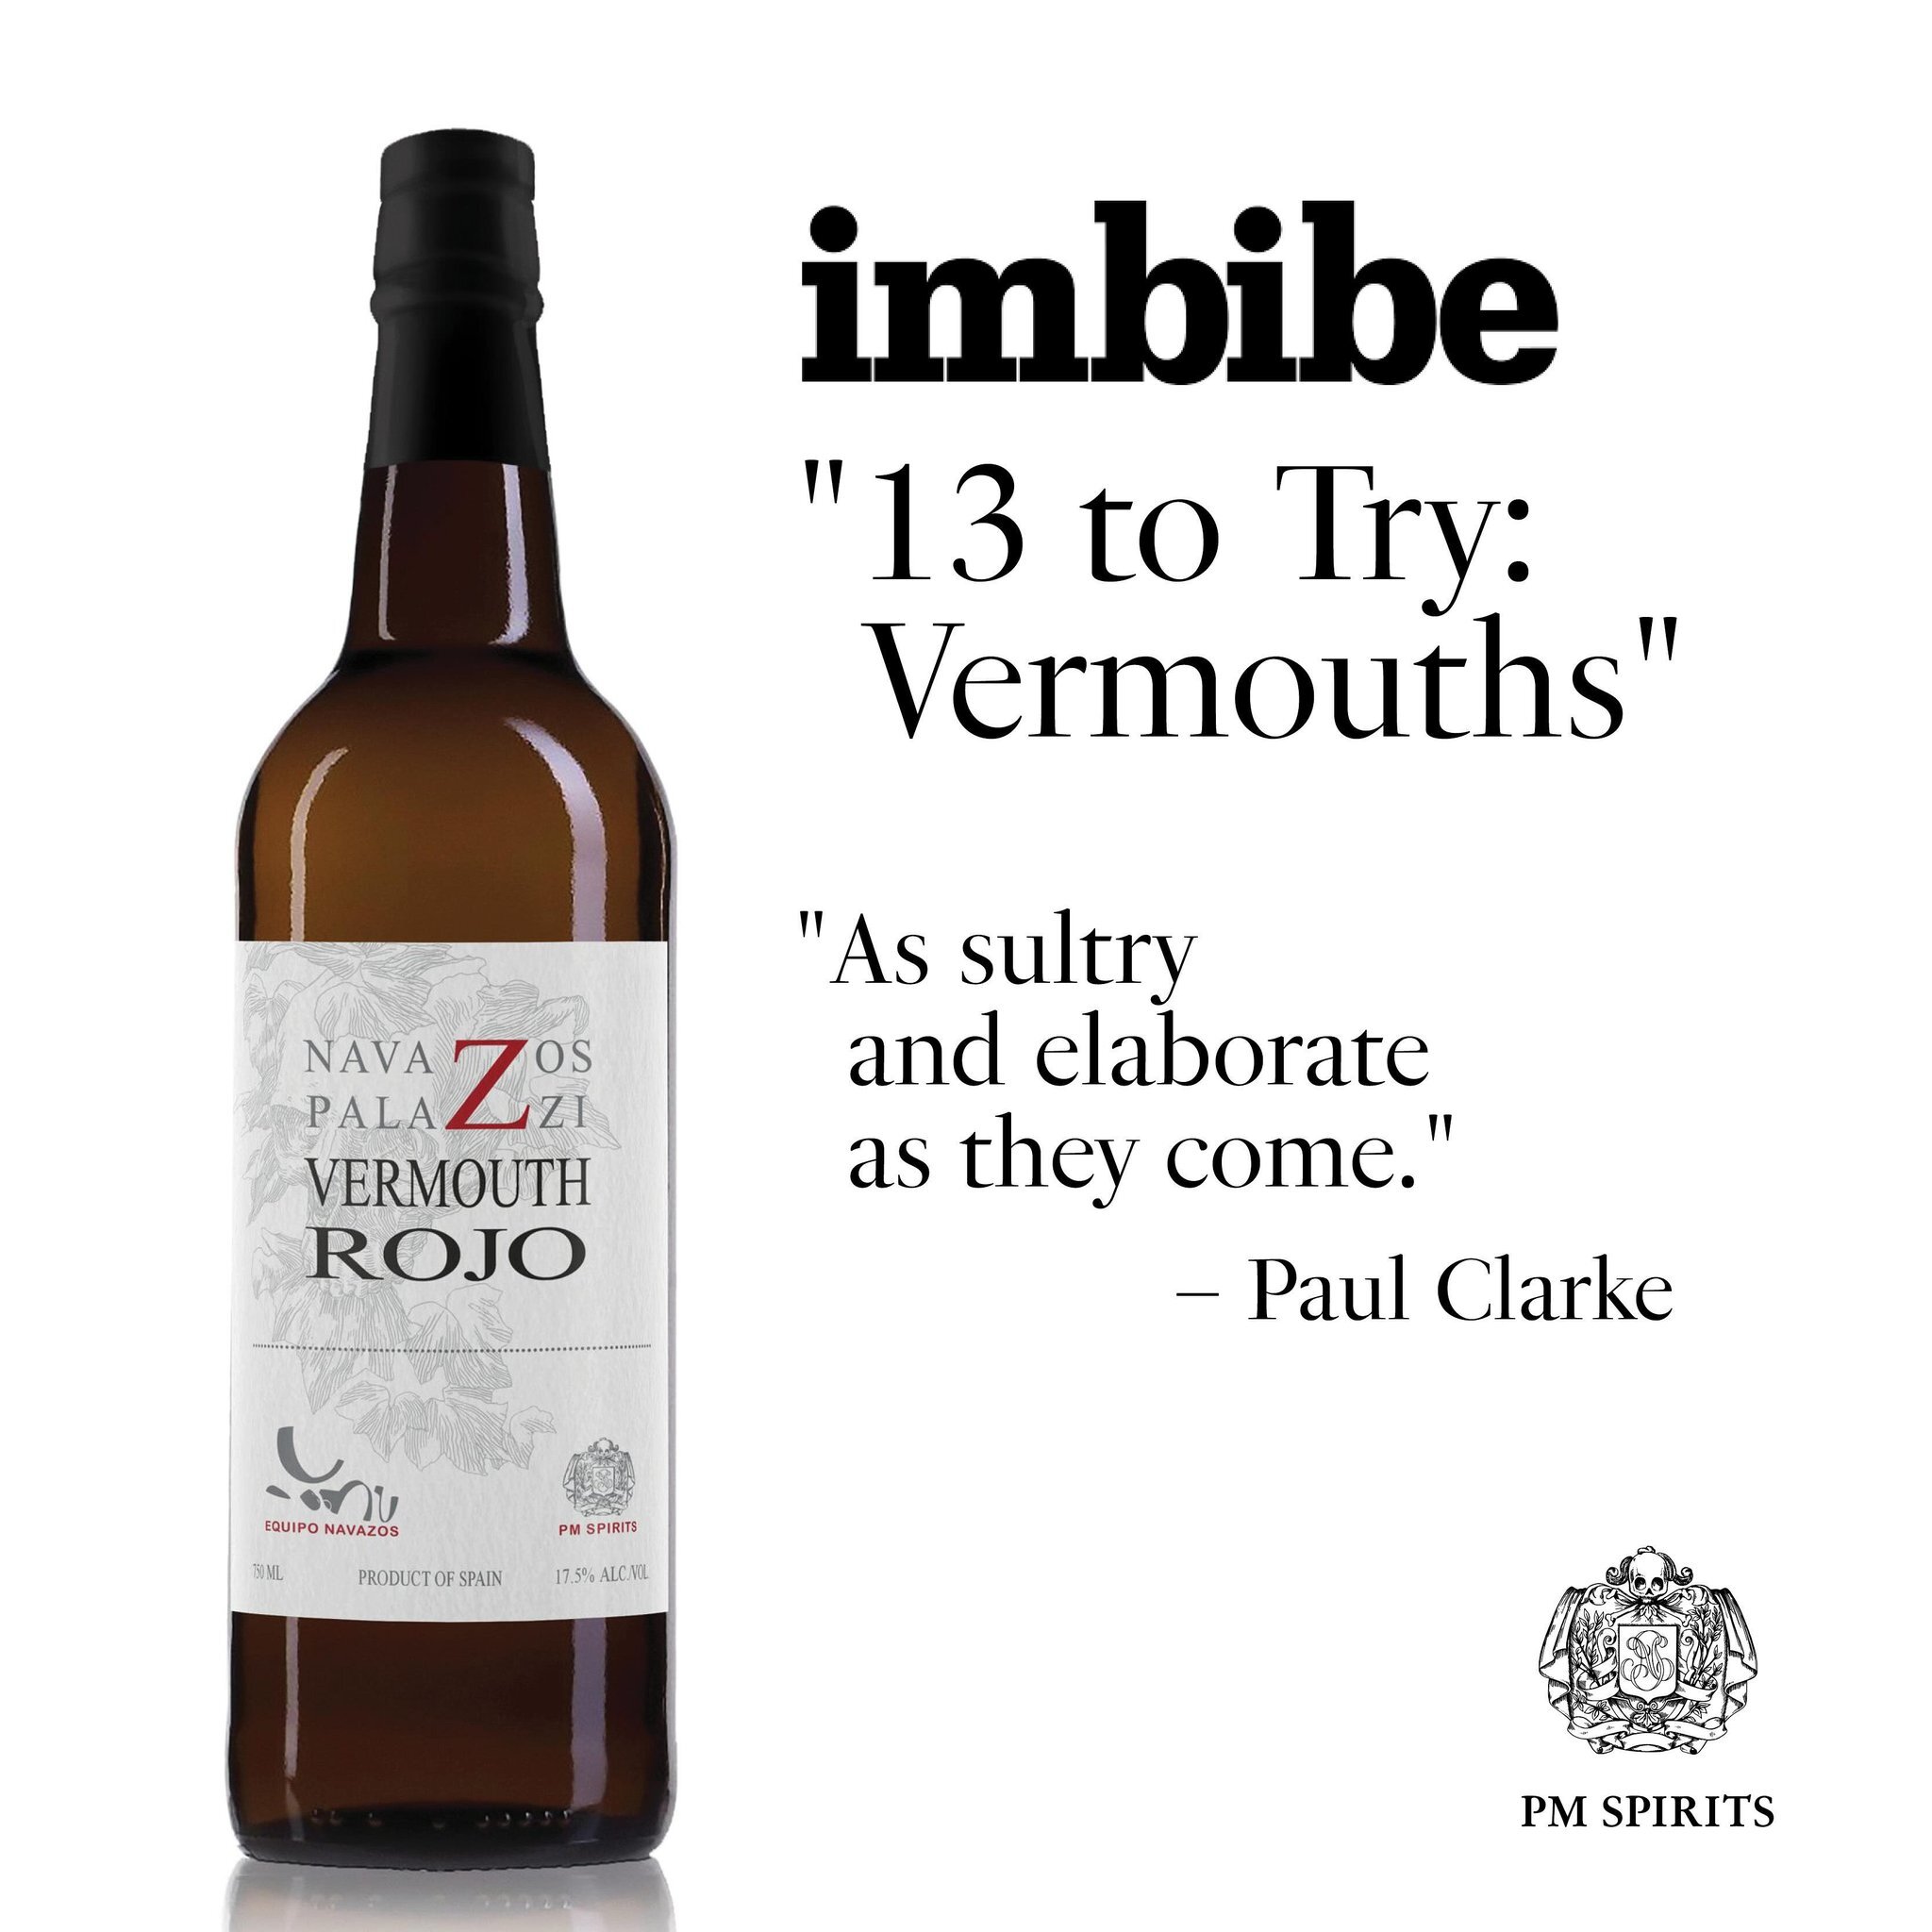 this wednesday is going ok so far.

thx a ton @cocktailchron &amp; @imbibe 

#drinklessdrinkbetter #pmspirits #vermouth